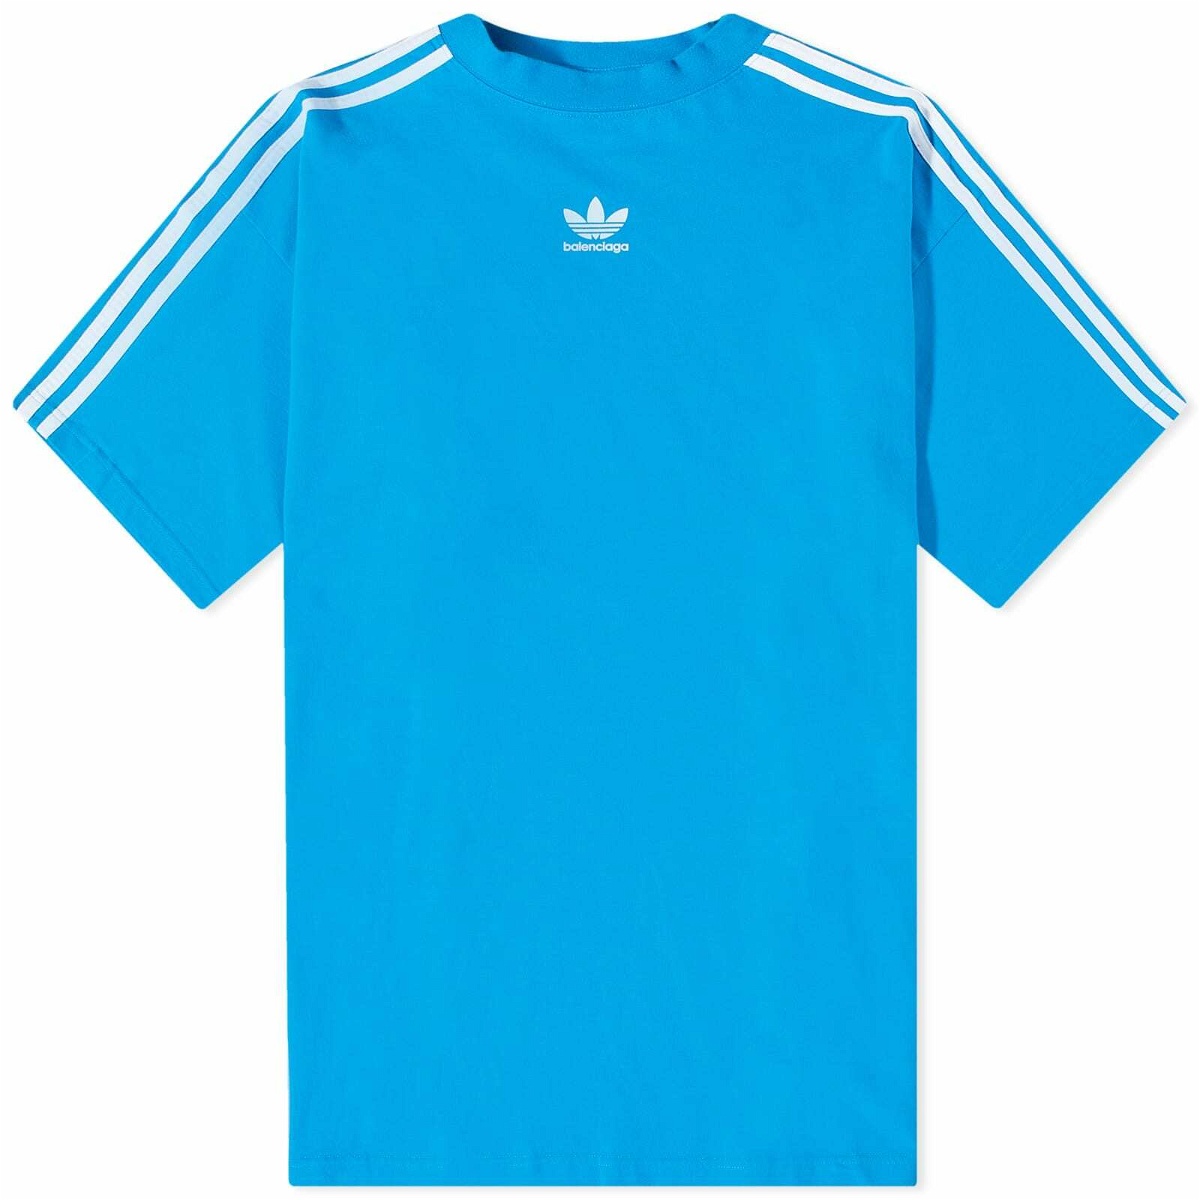 Balenciaga x Adidas T-Shirt in Blue/White Balenciaga